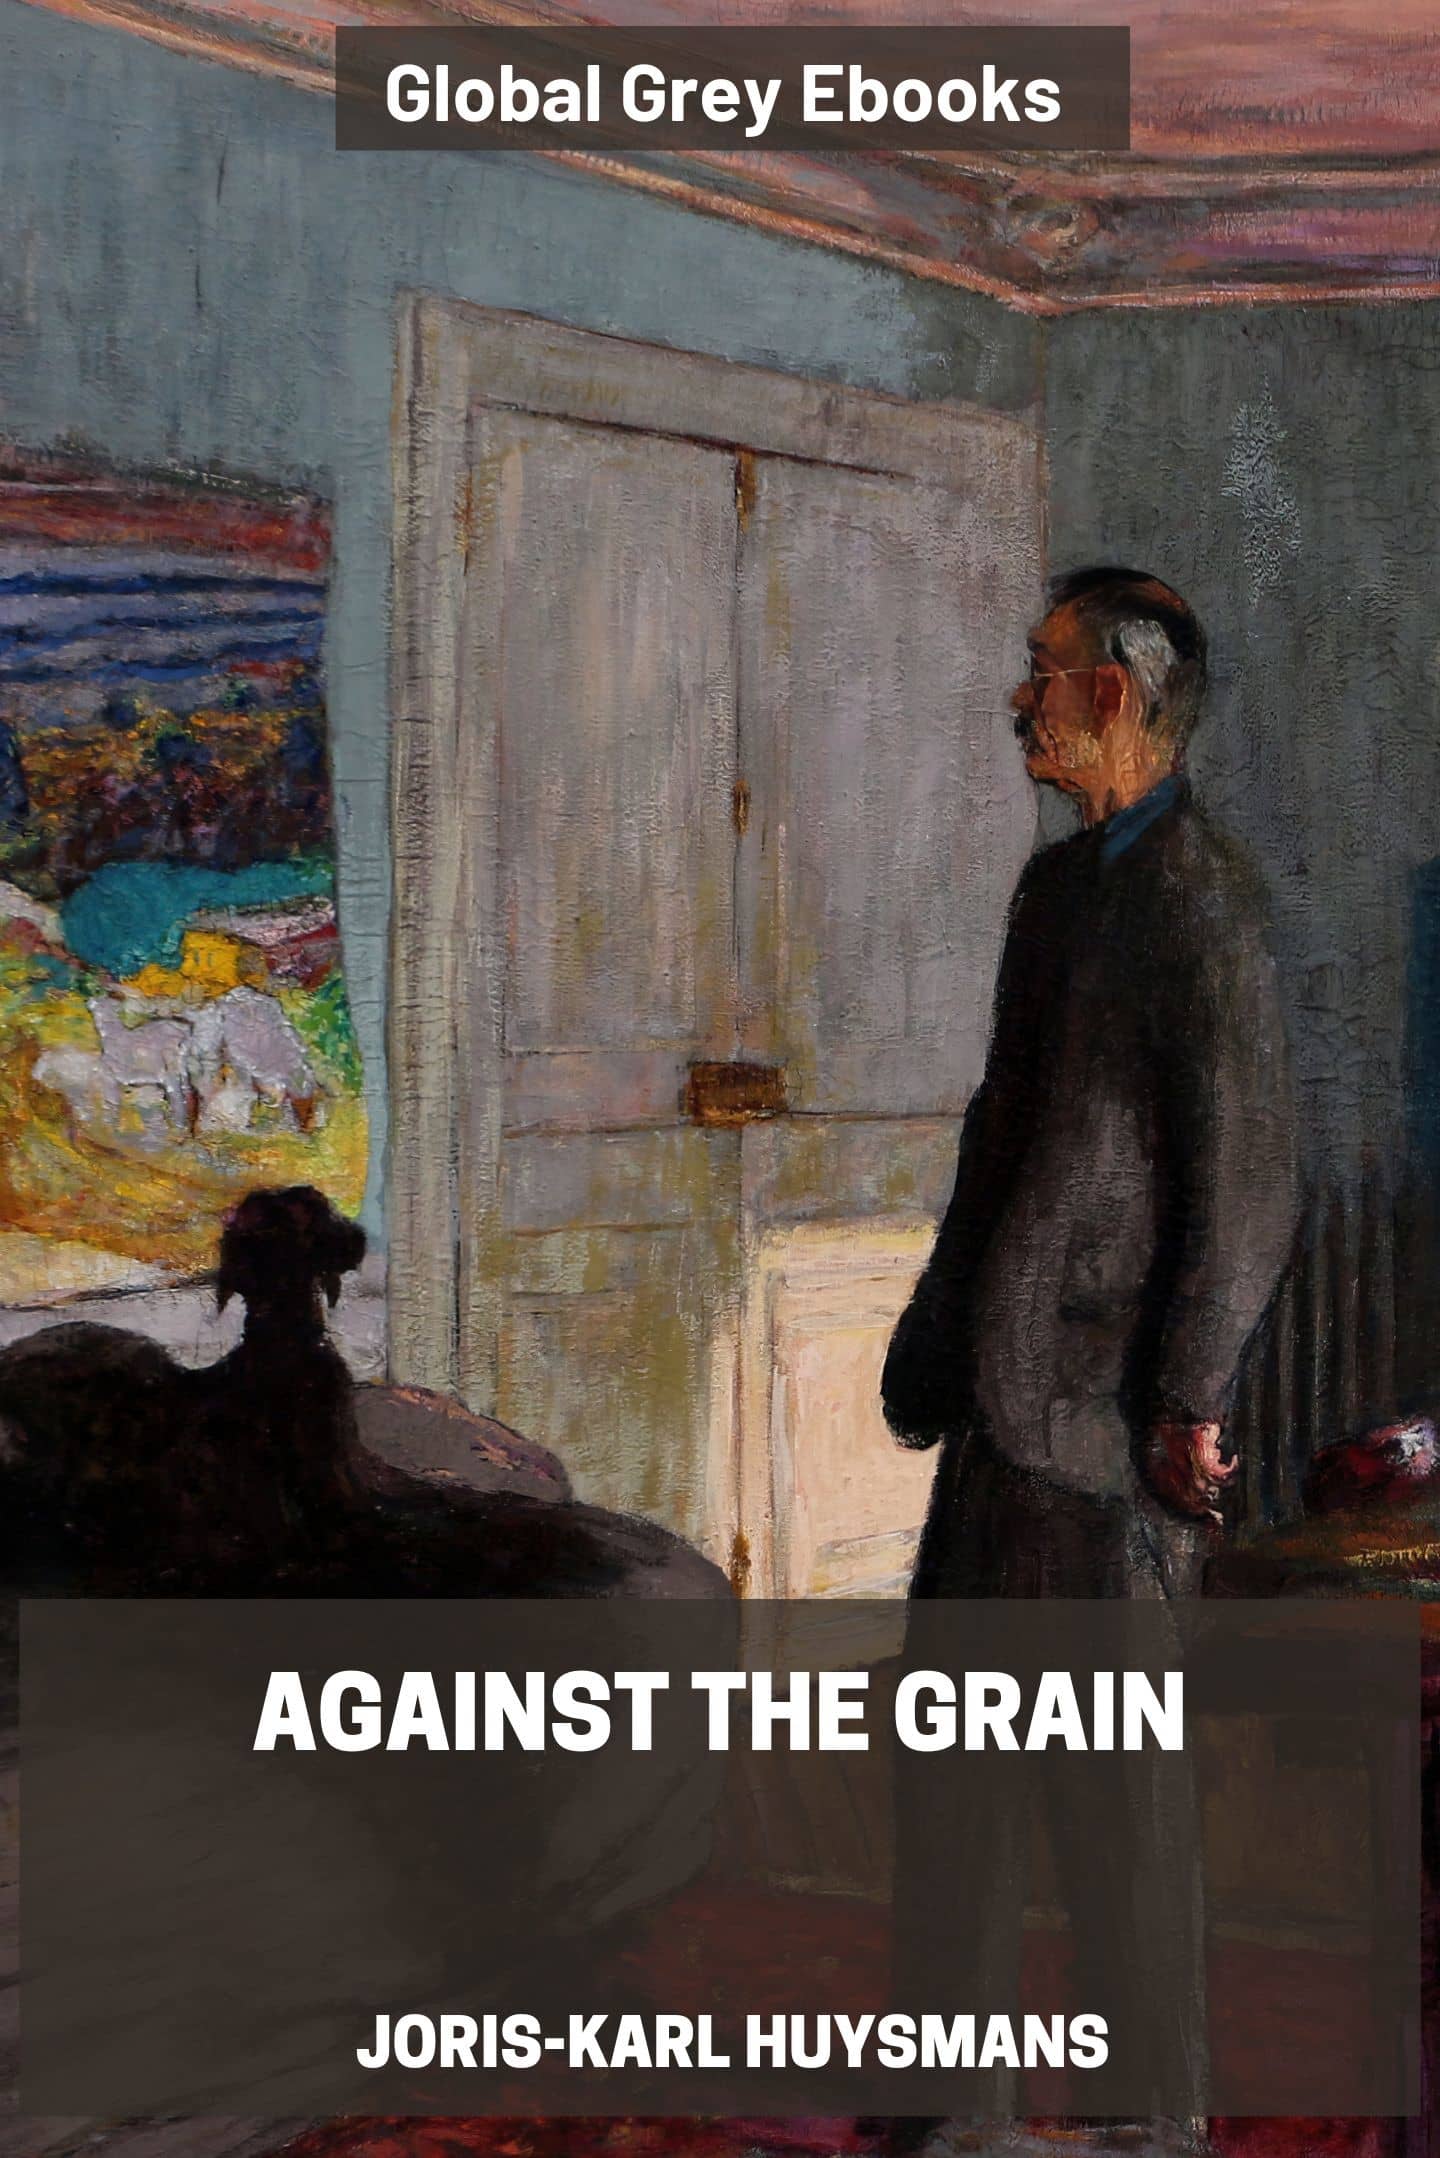 Against the Grain, by Joris-Karl Huysmans - Complete text online